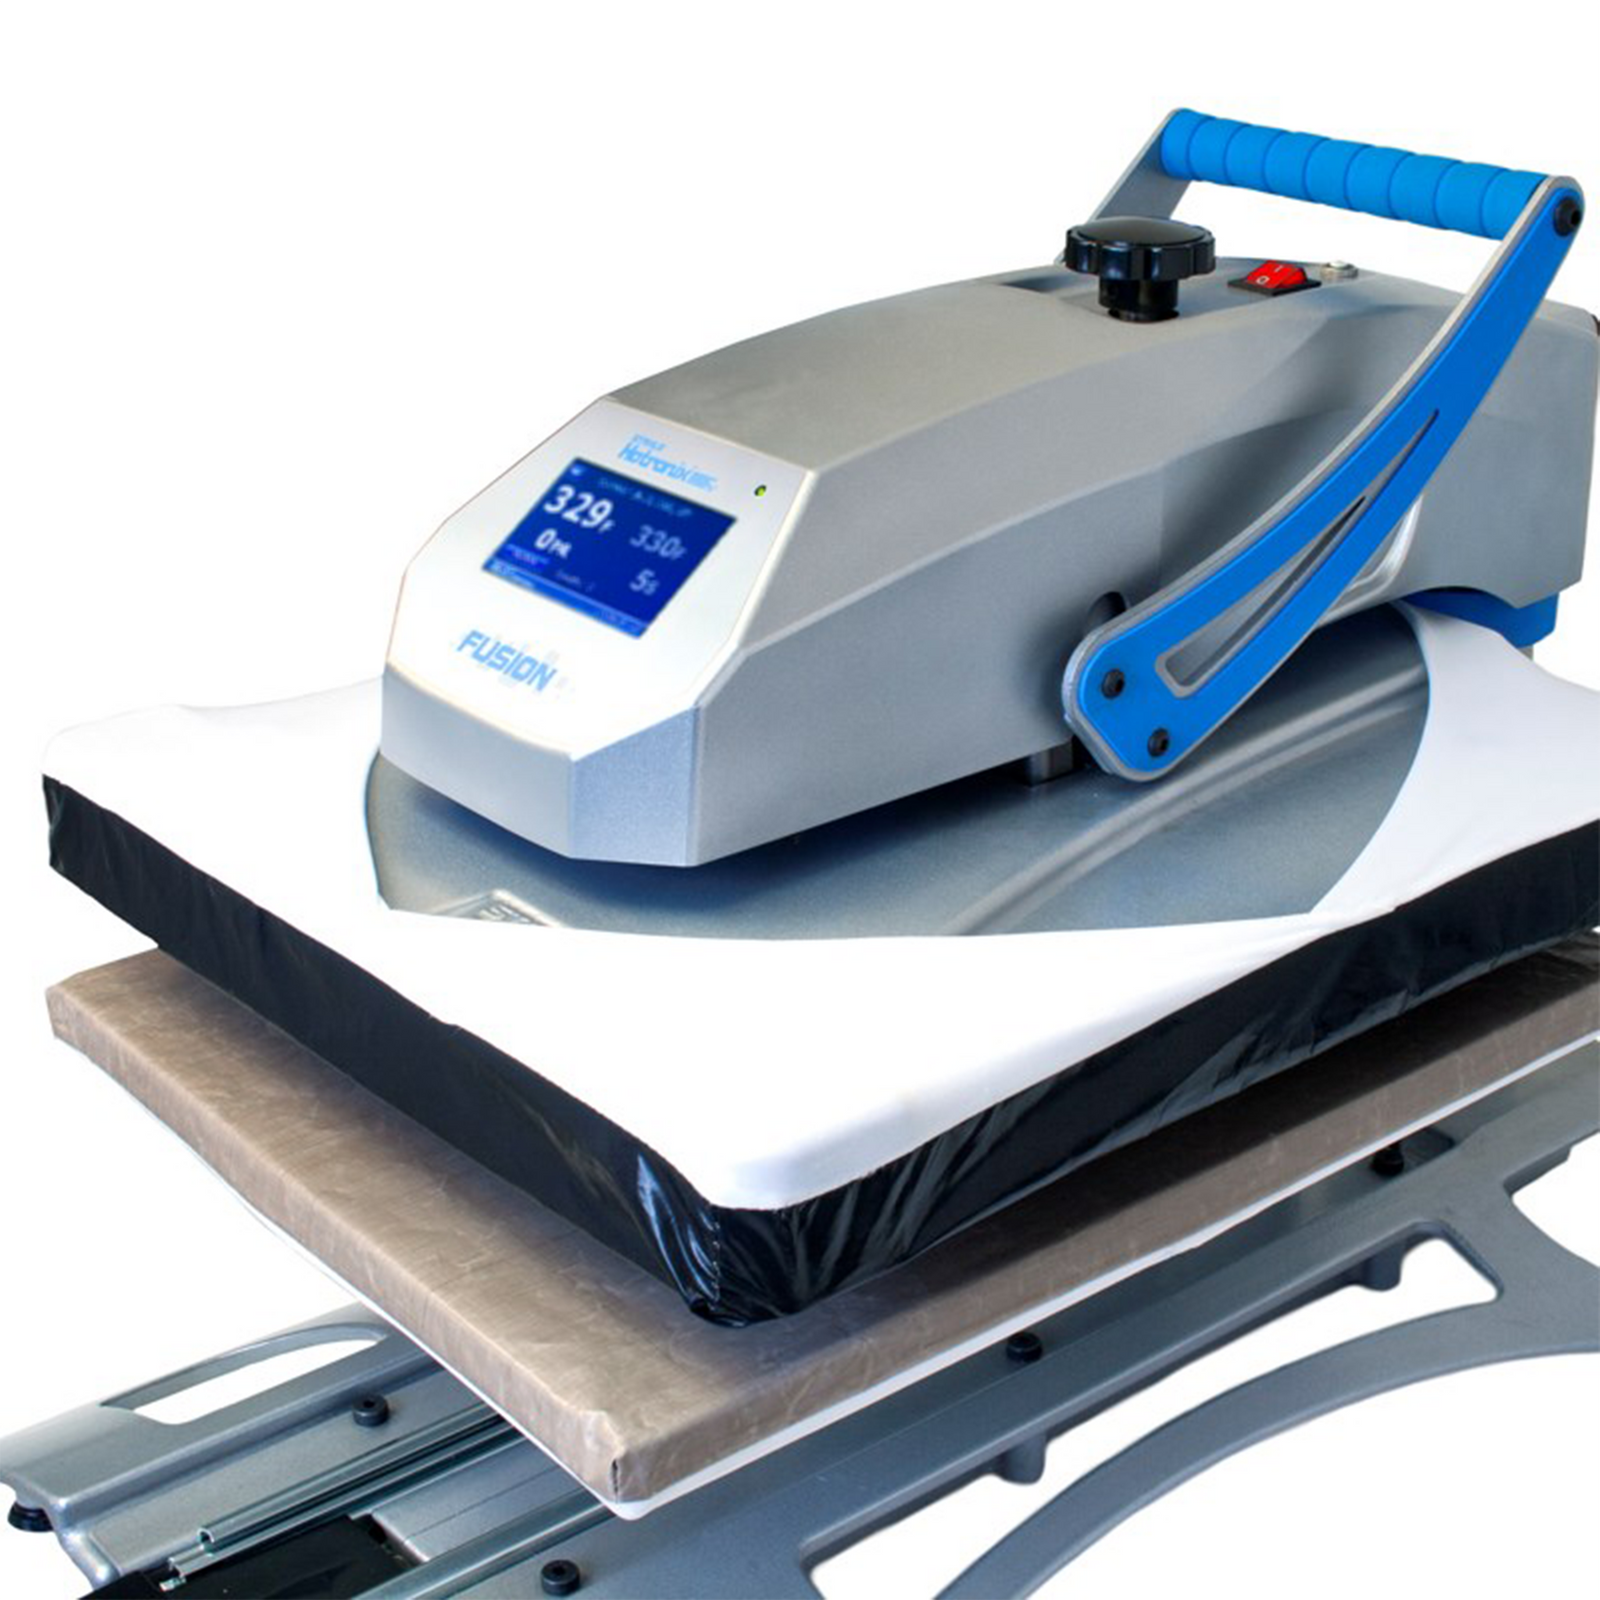 Heat Press Accessories  Laser Transfer Supplies